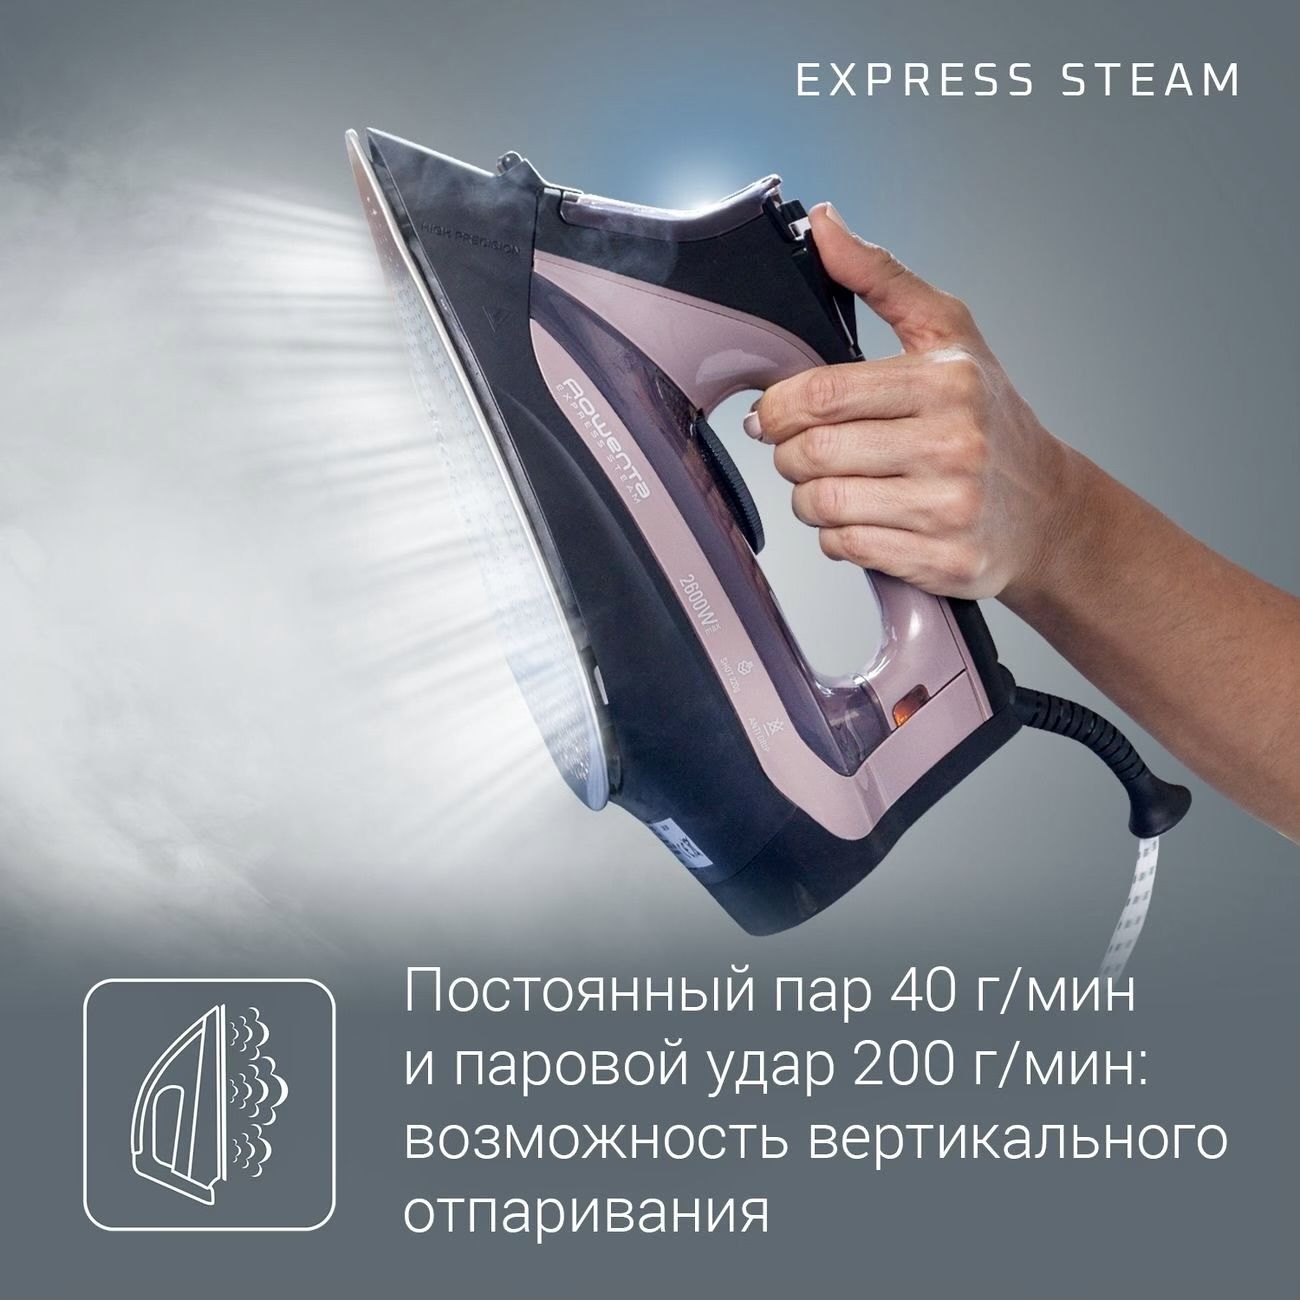 Express steam dw4345d1 фото 4